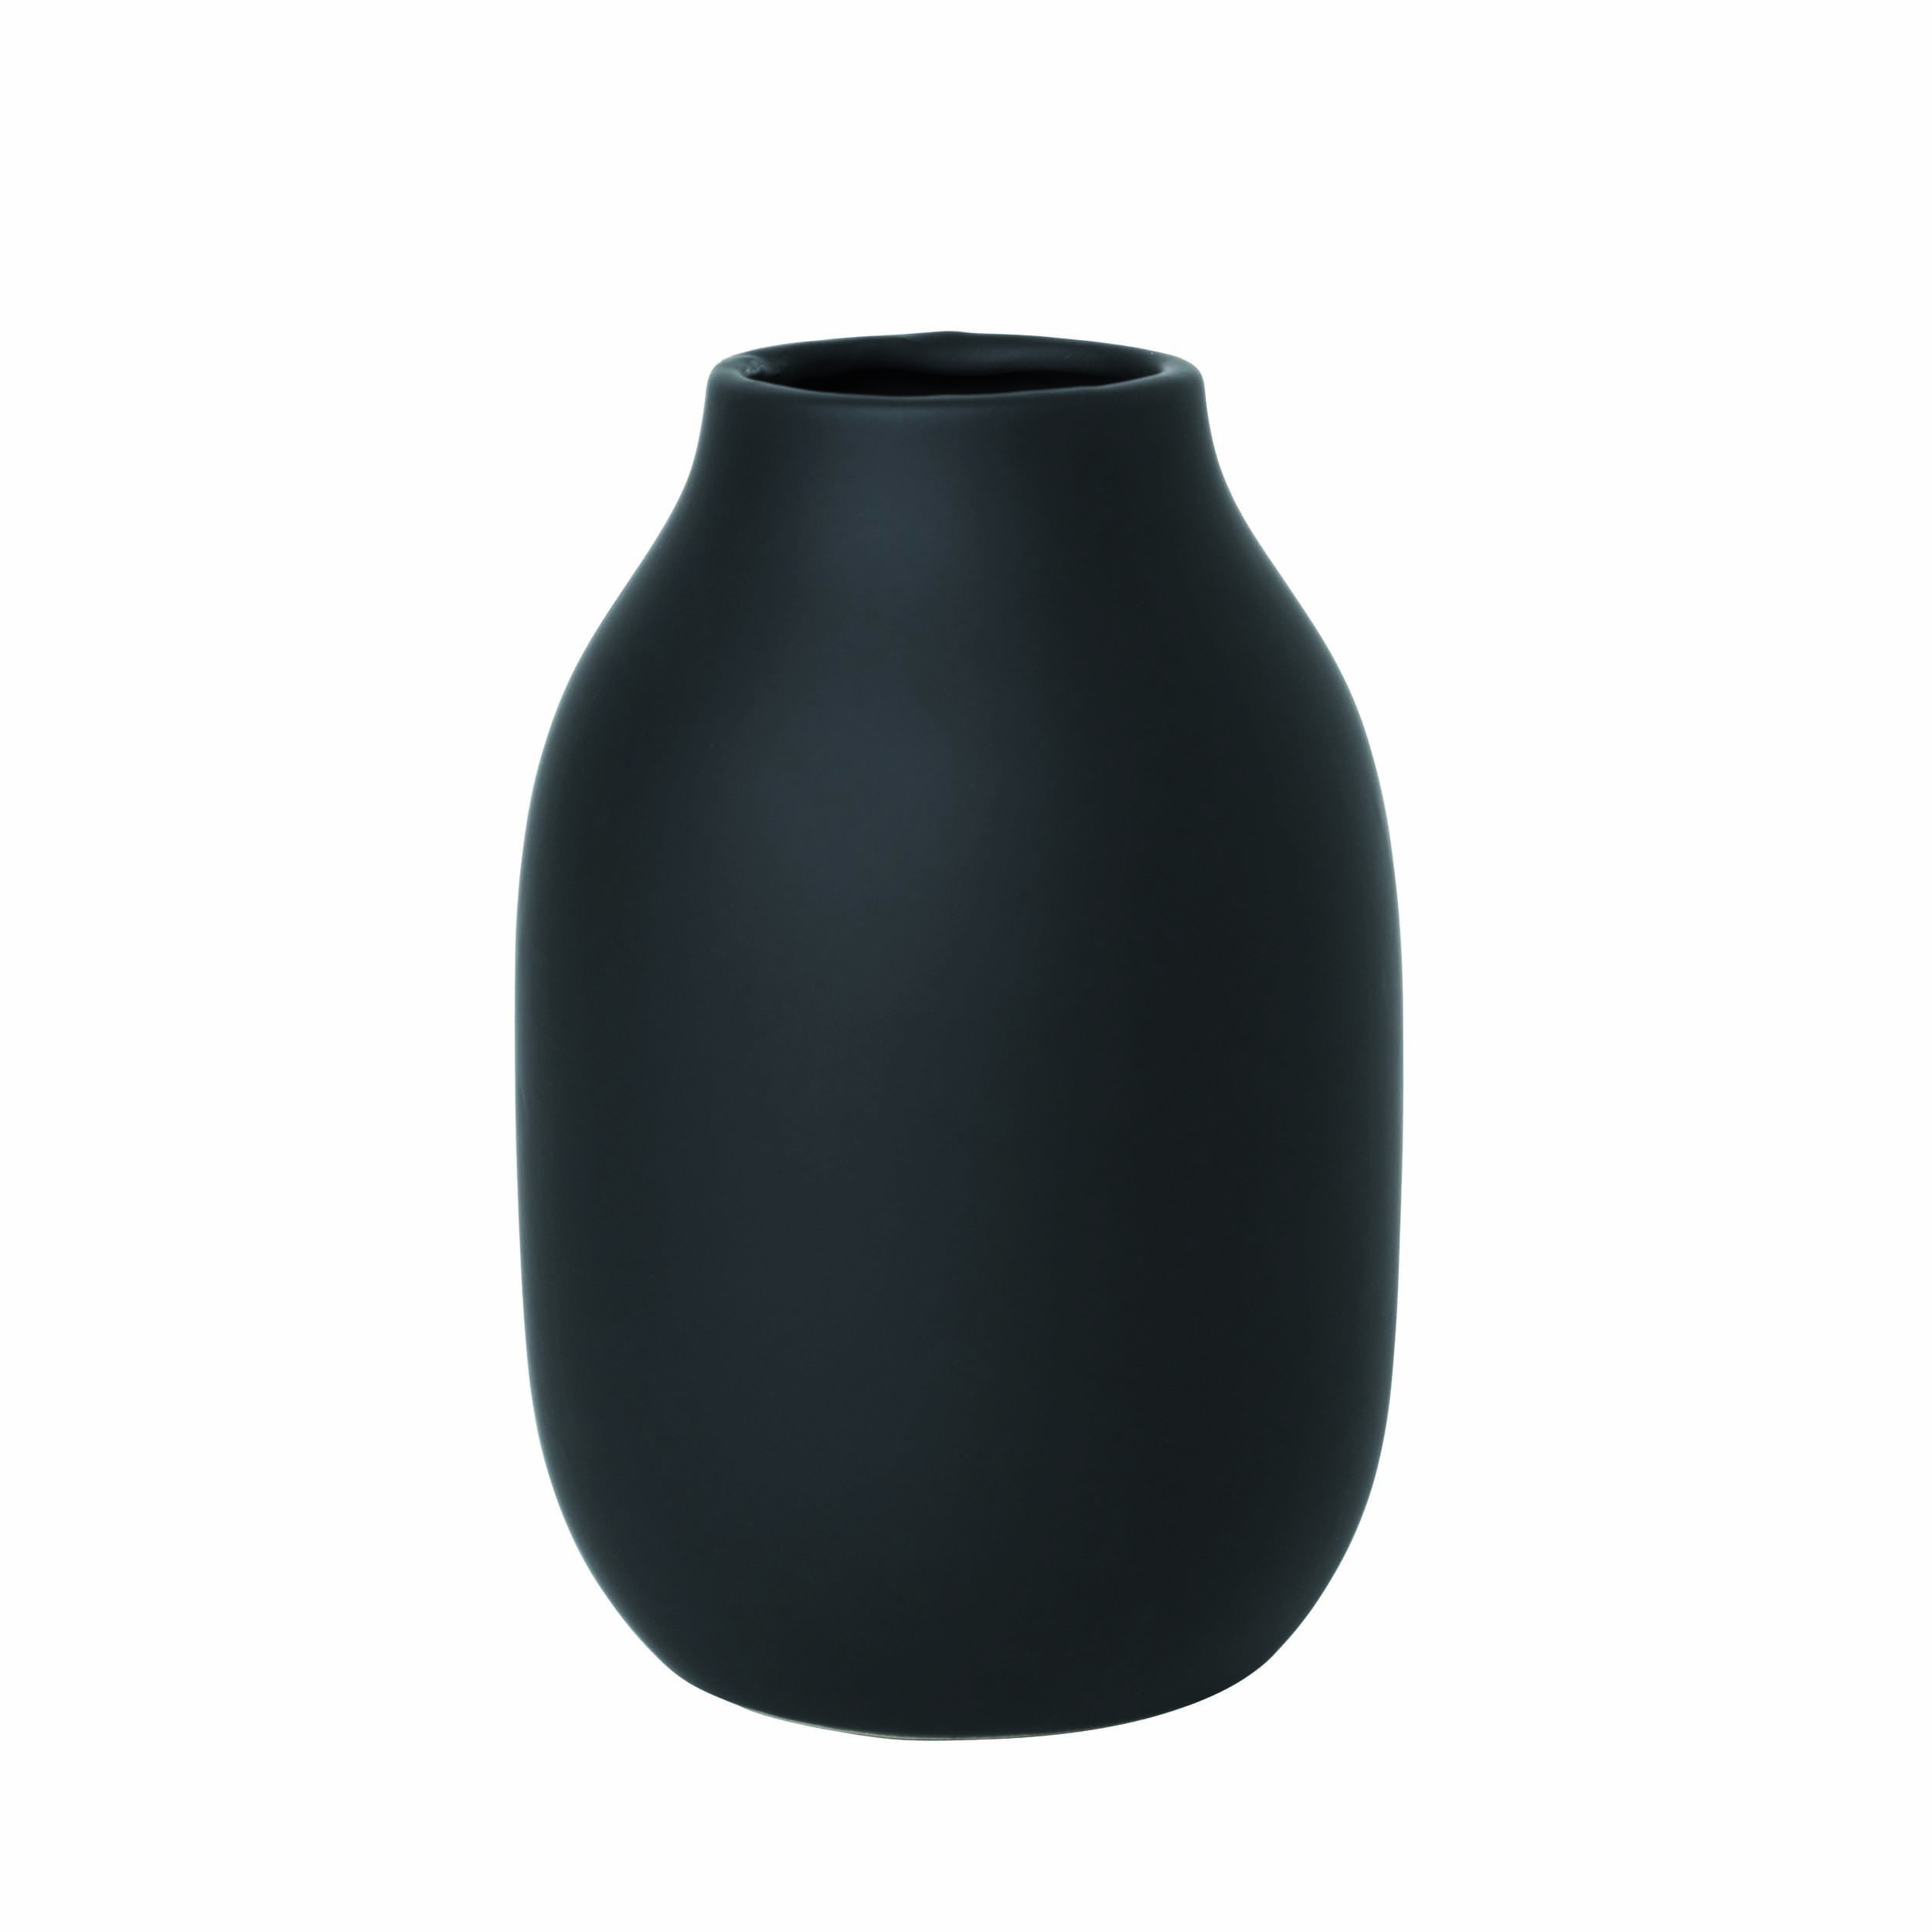 Acrylic Handtied Vase Black 8 InchesTall 